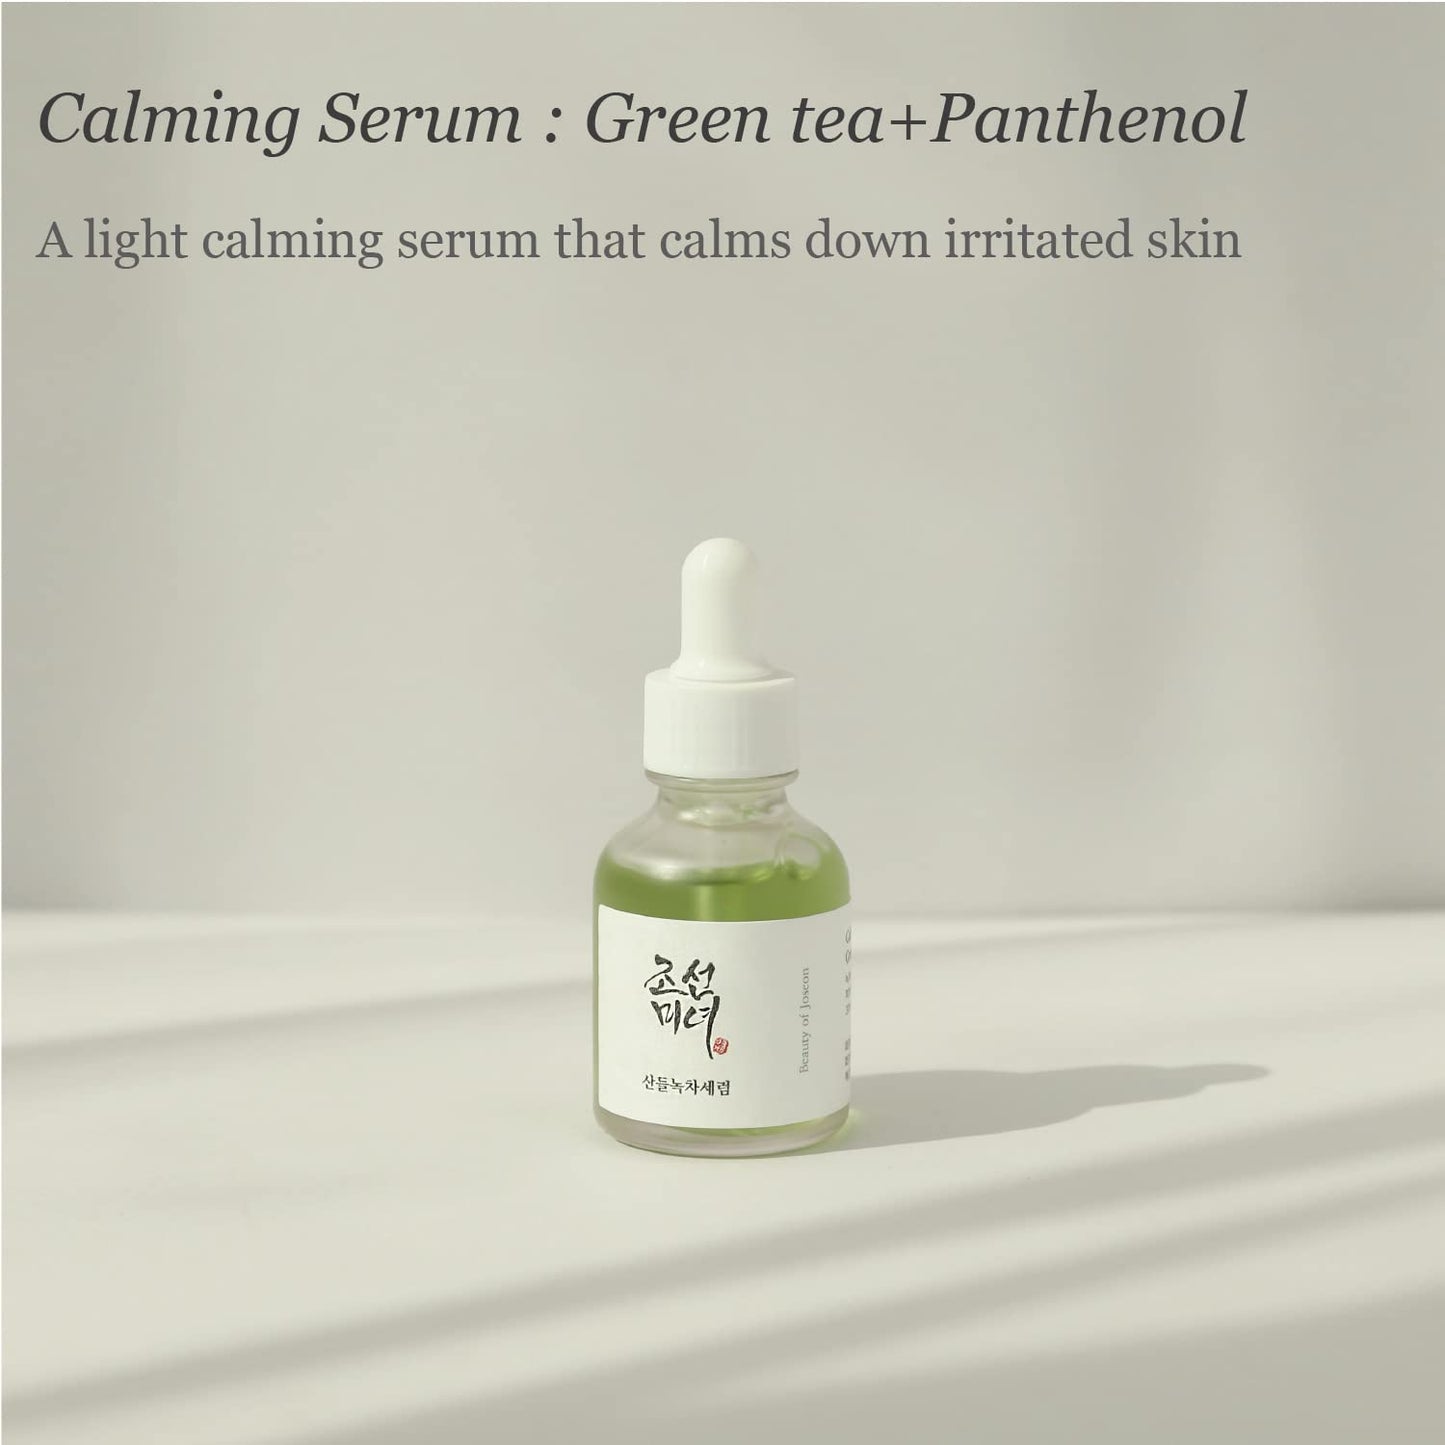 Calming serum Green tea + Panthenol by Beauty of Joseon